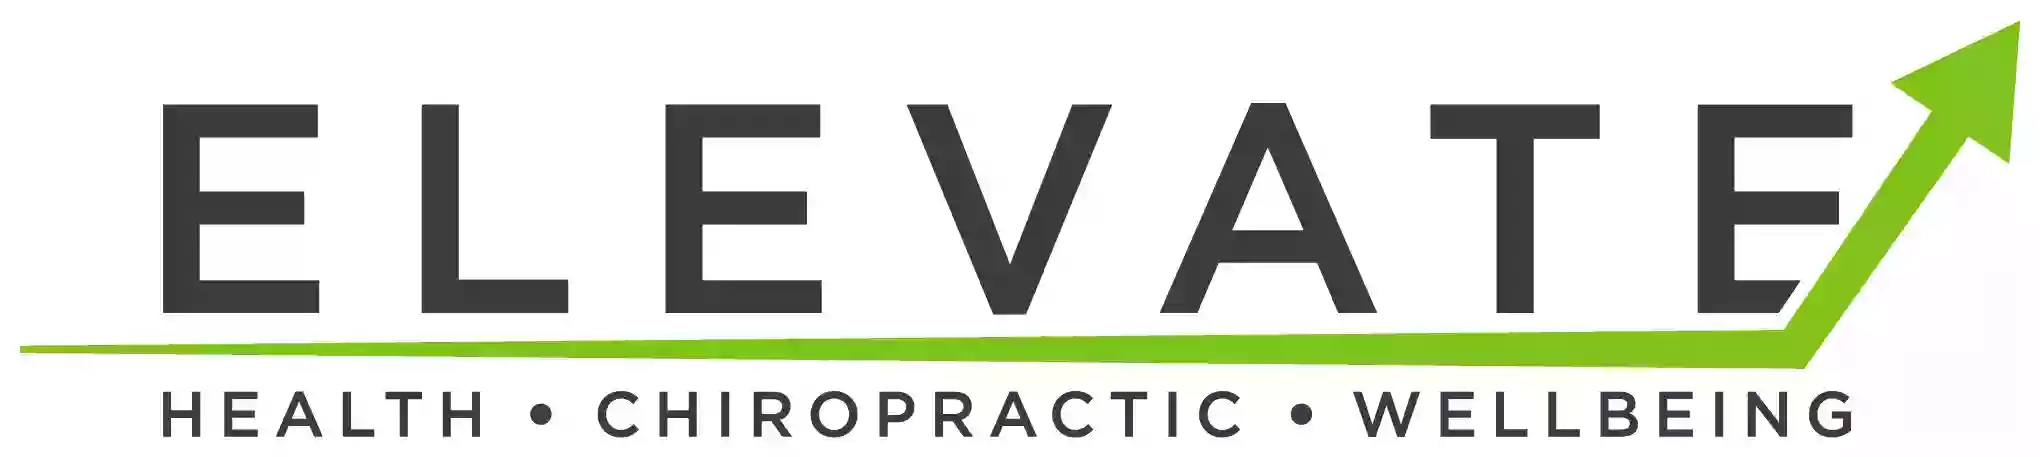 Elevate Health, Chiropractic & Wellbeing Ltd